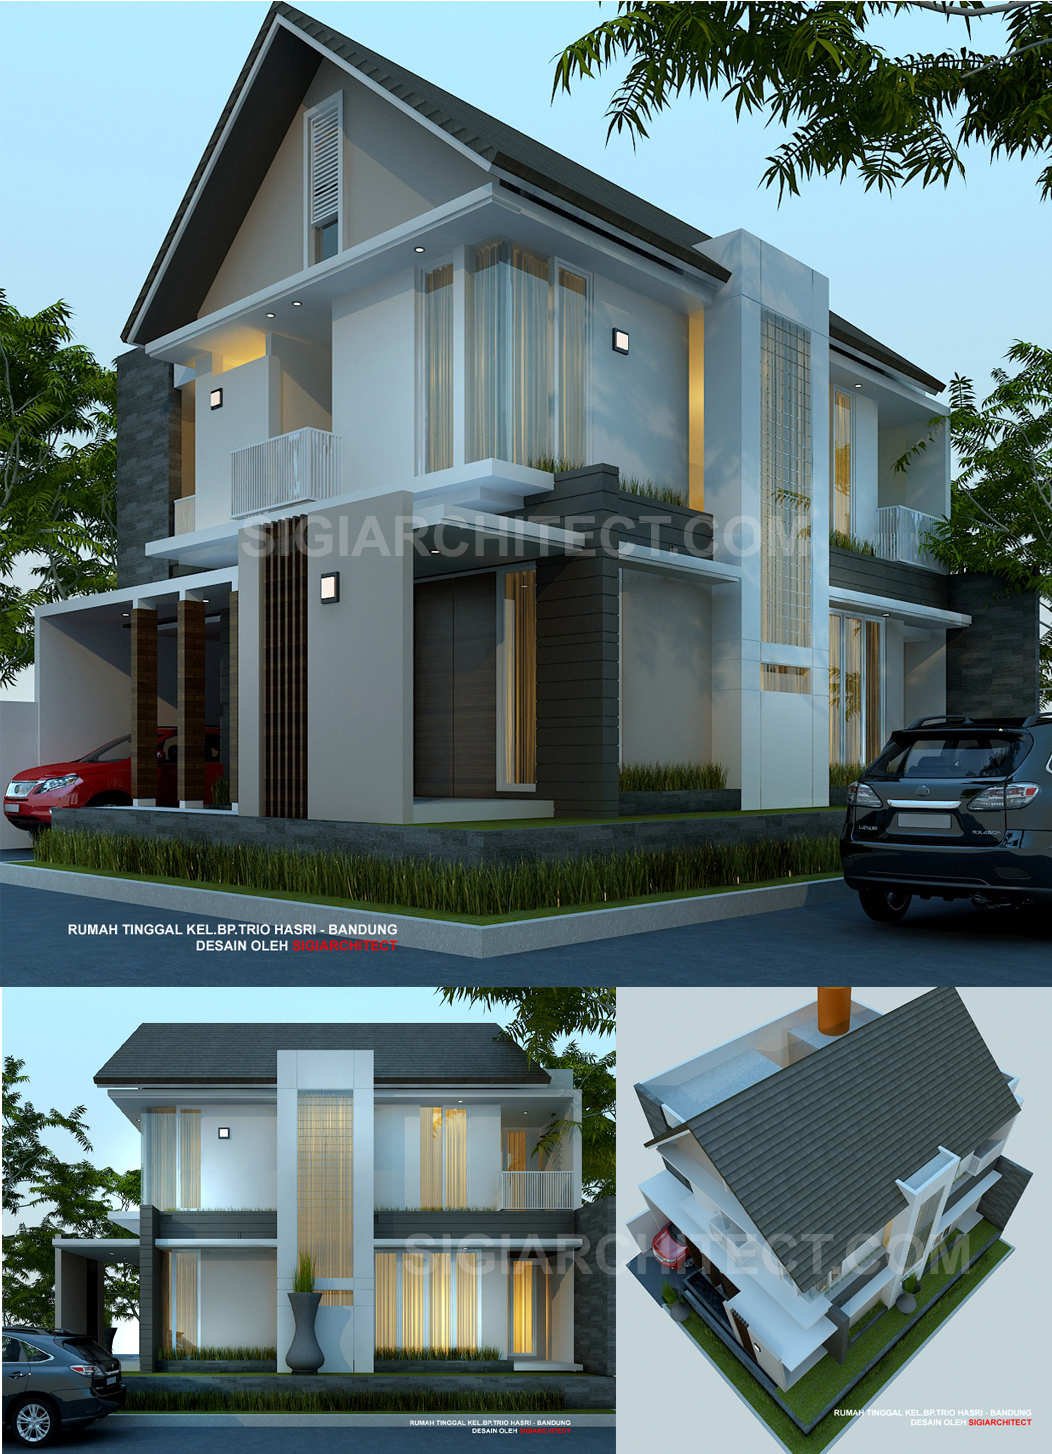 Desain Rumah Tumbuh 2 Lantai Kavling Hoo Fasad Tropis Minimalis